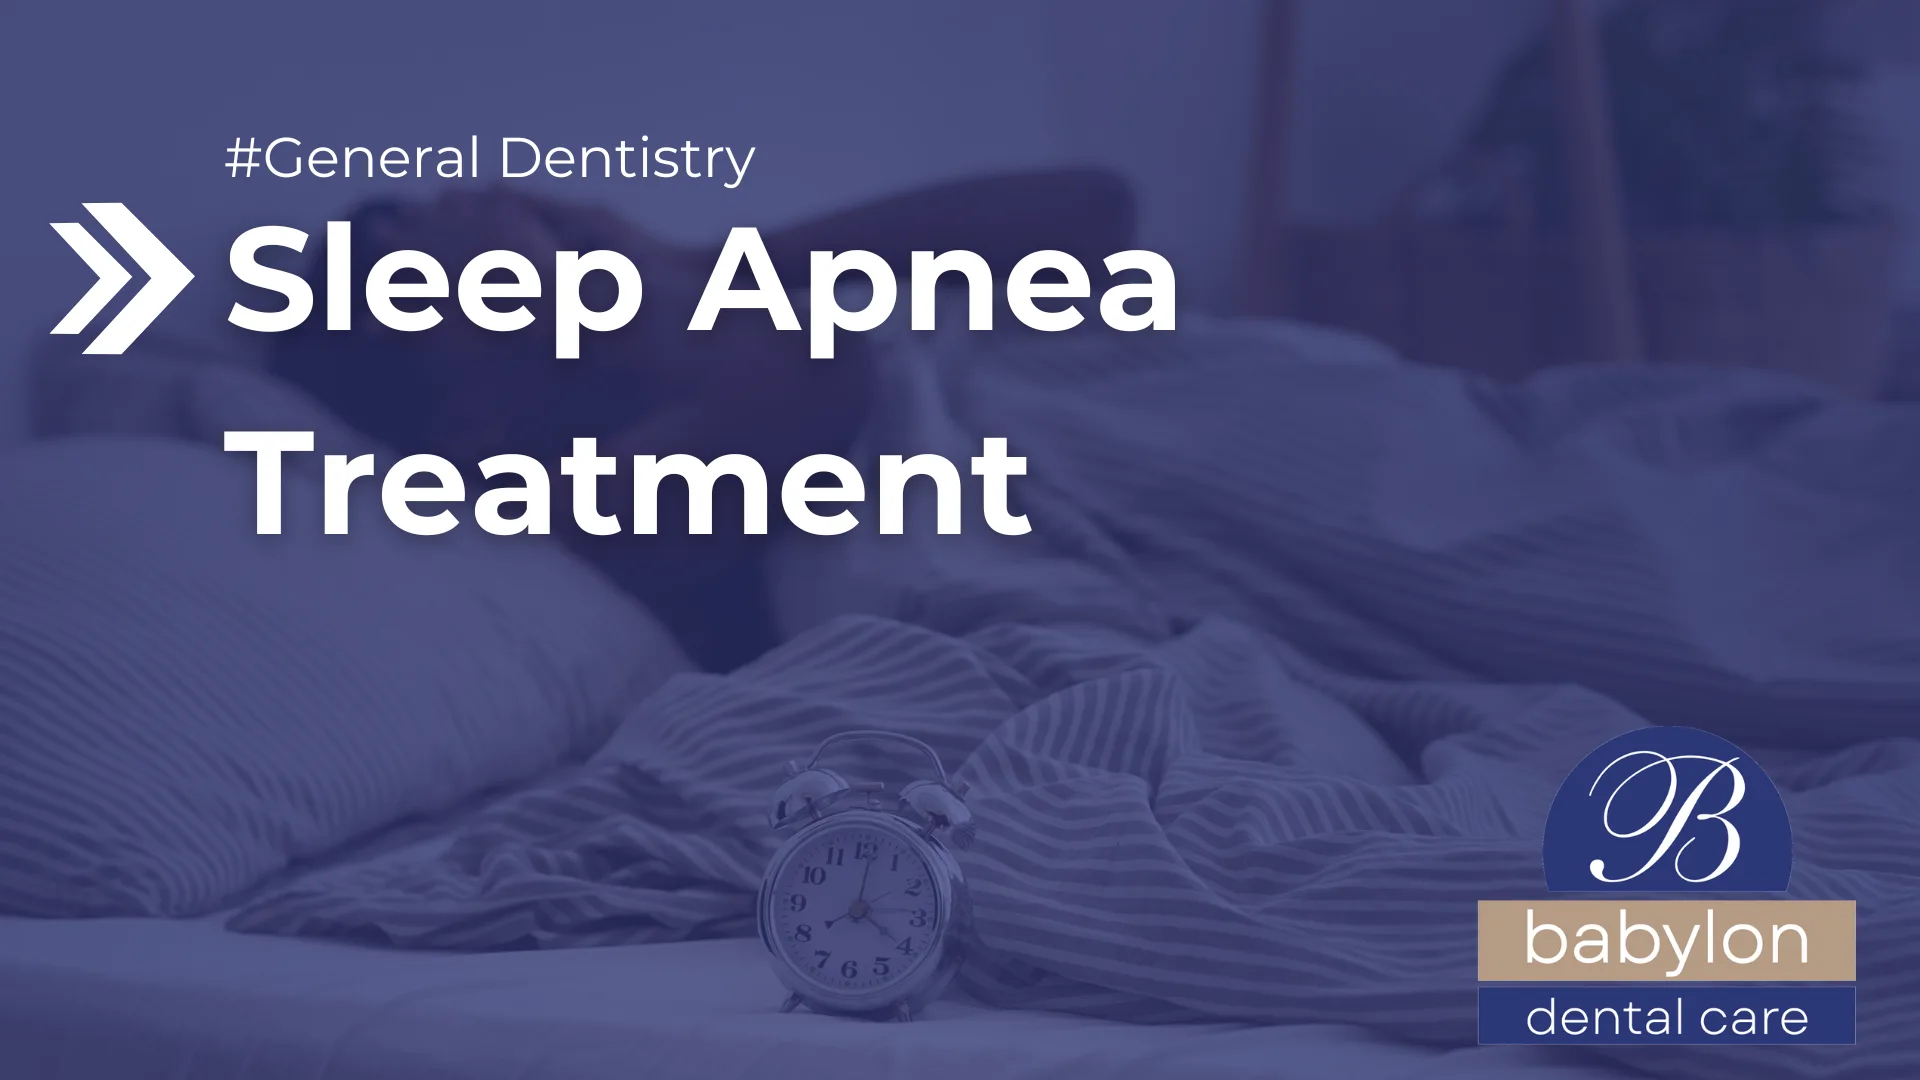 Sleep Apnea Treatment Image - new logo